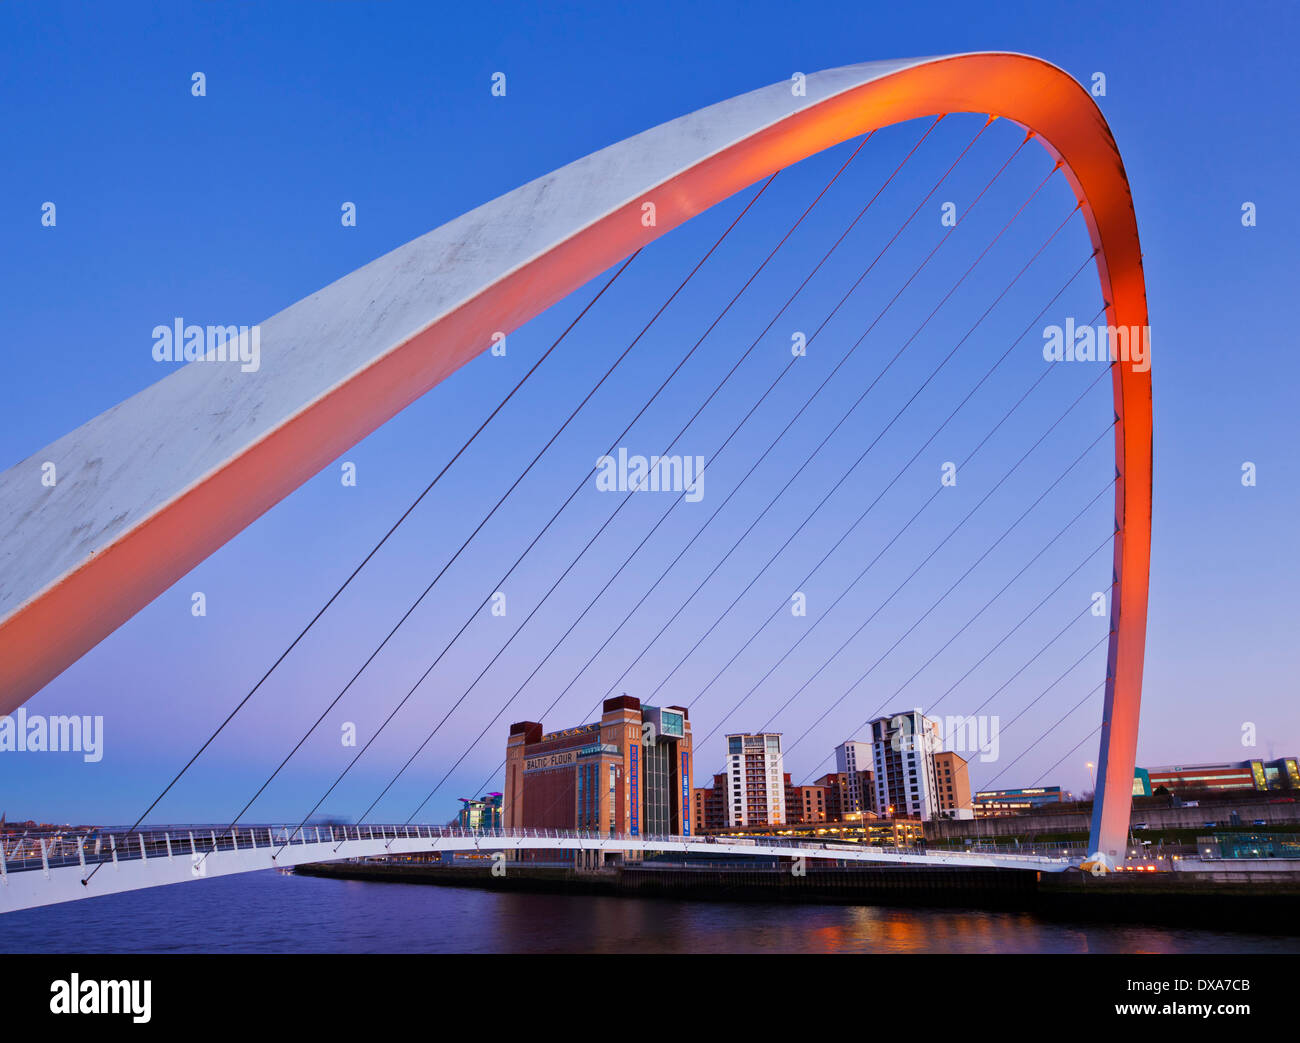 gateshead Millennium bridge over River Tyne at night Tyne and Wear Tyneside England UK GB EU Europe Stock Photo